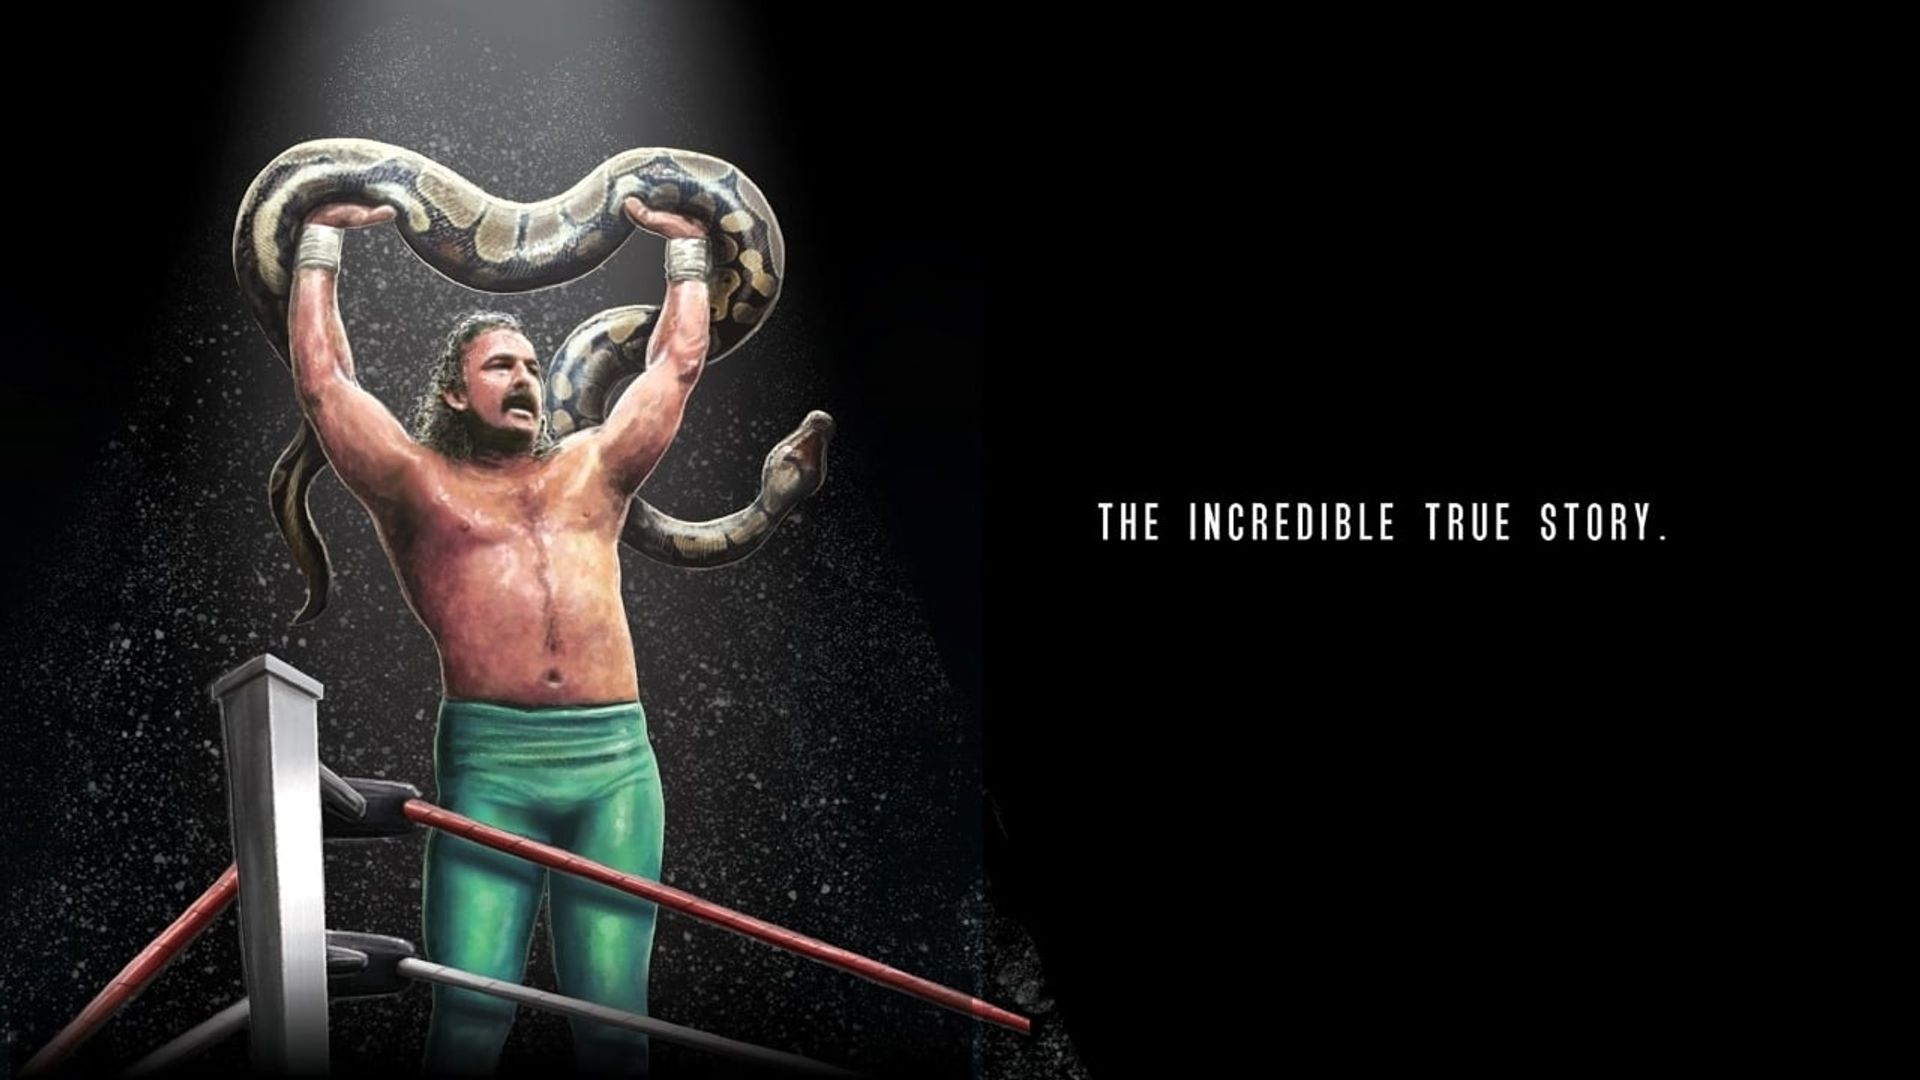 The Resurrection of Jake the Snake background